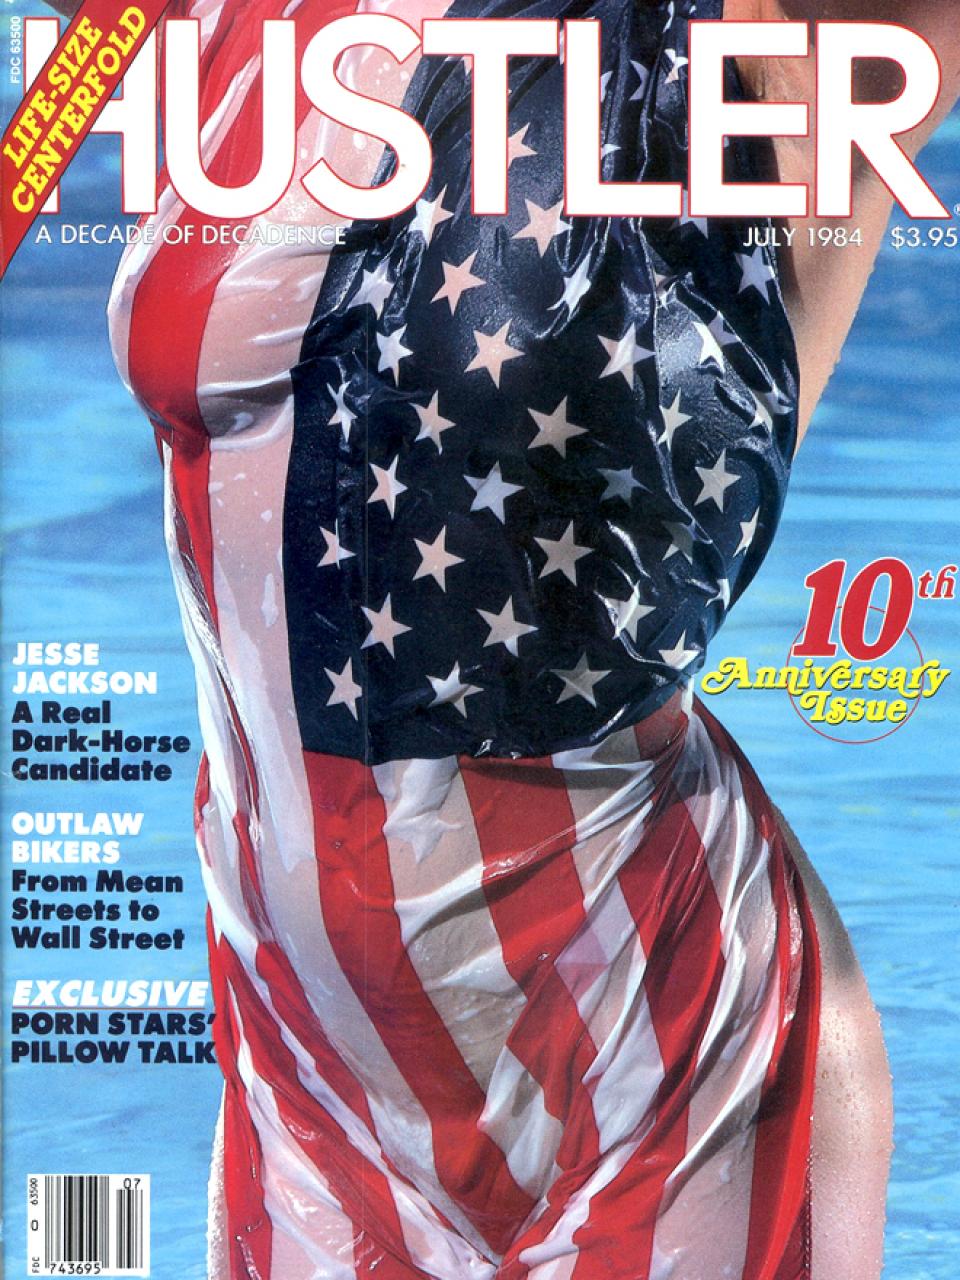 July 1984 - HUSTLER Magazine.